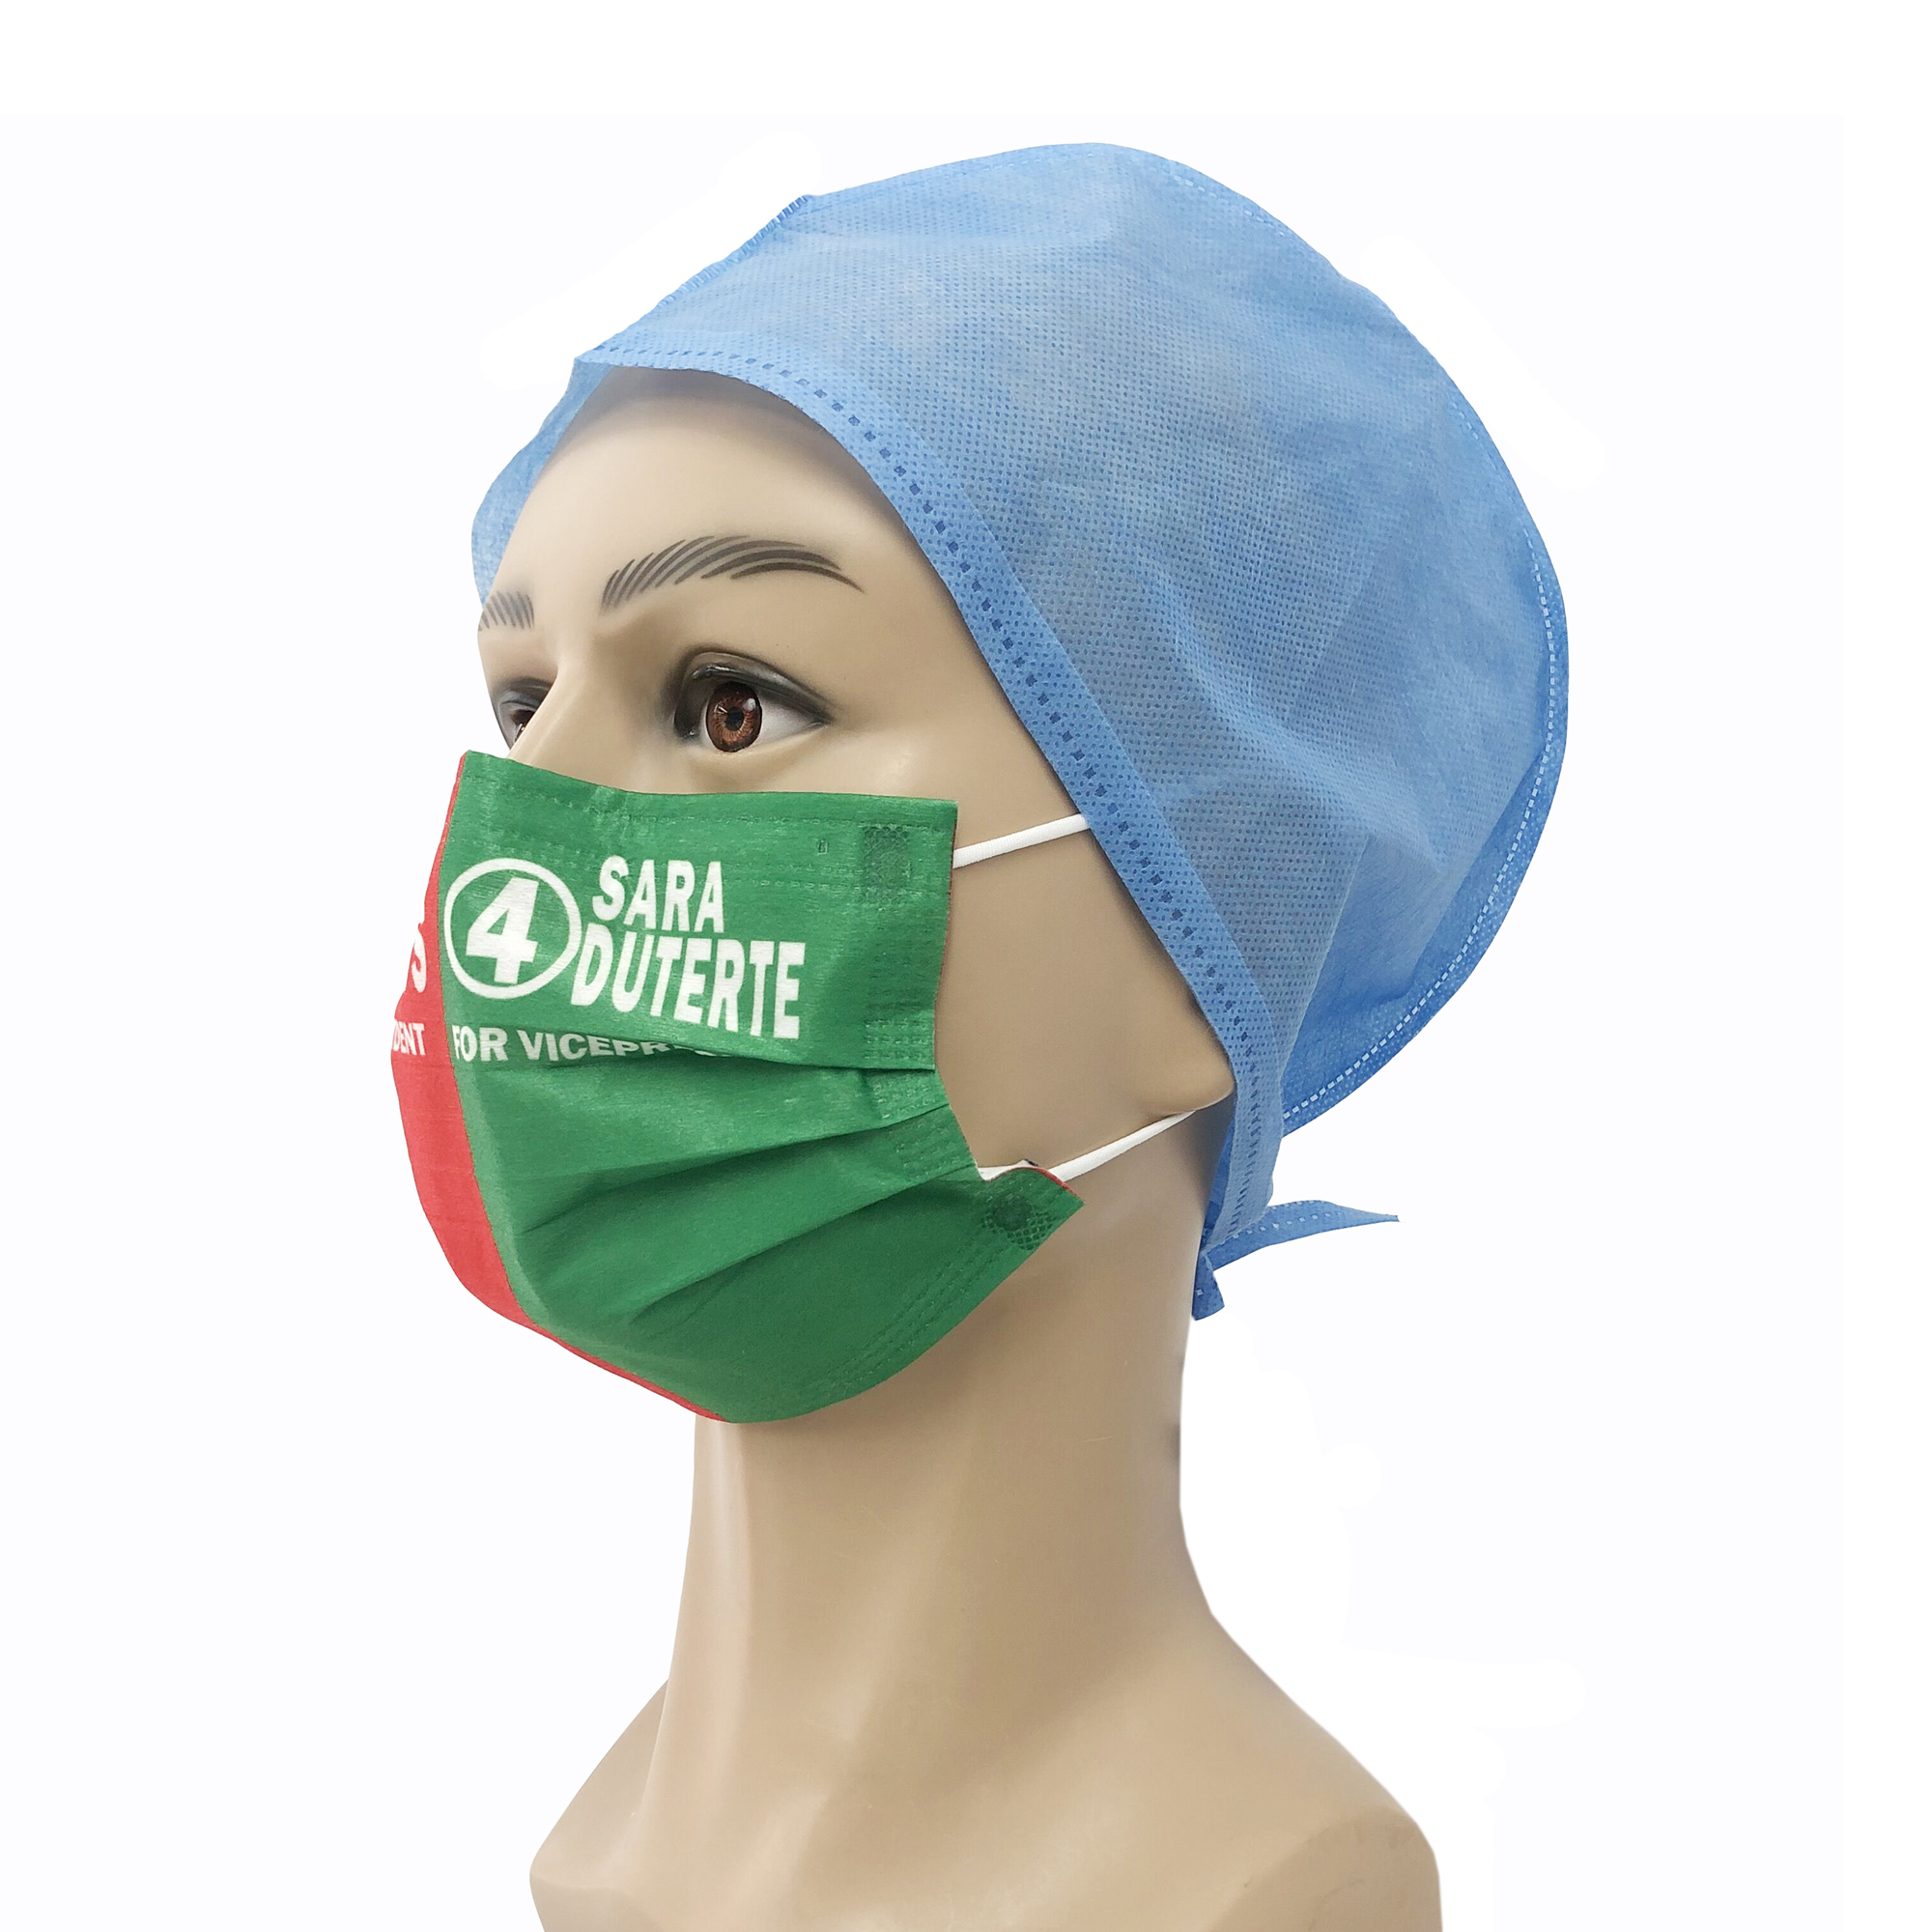 TypeIIR EN14683 Disposable Medical Face Masks